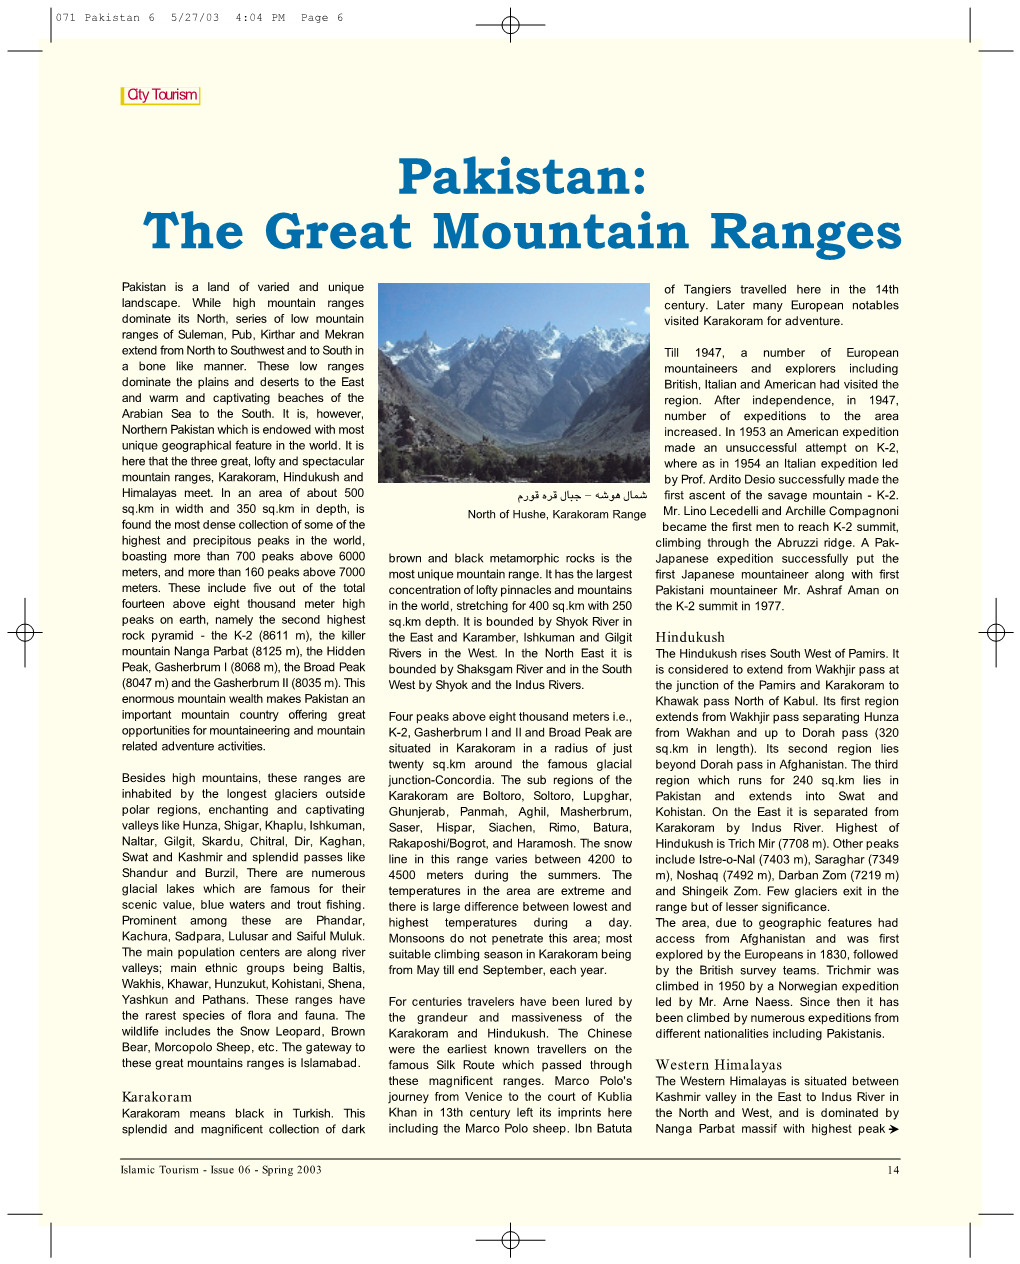 Pakistan: the Great Mountain Ranges